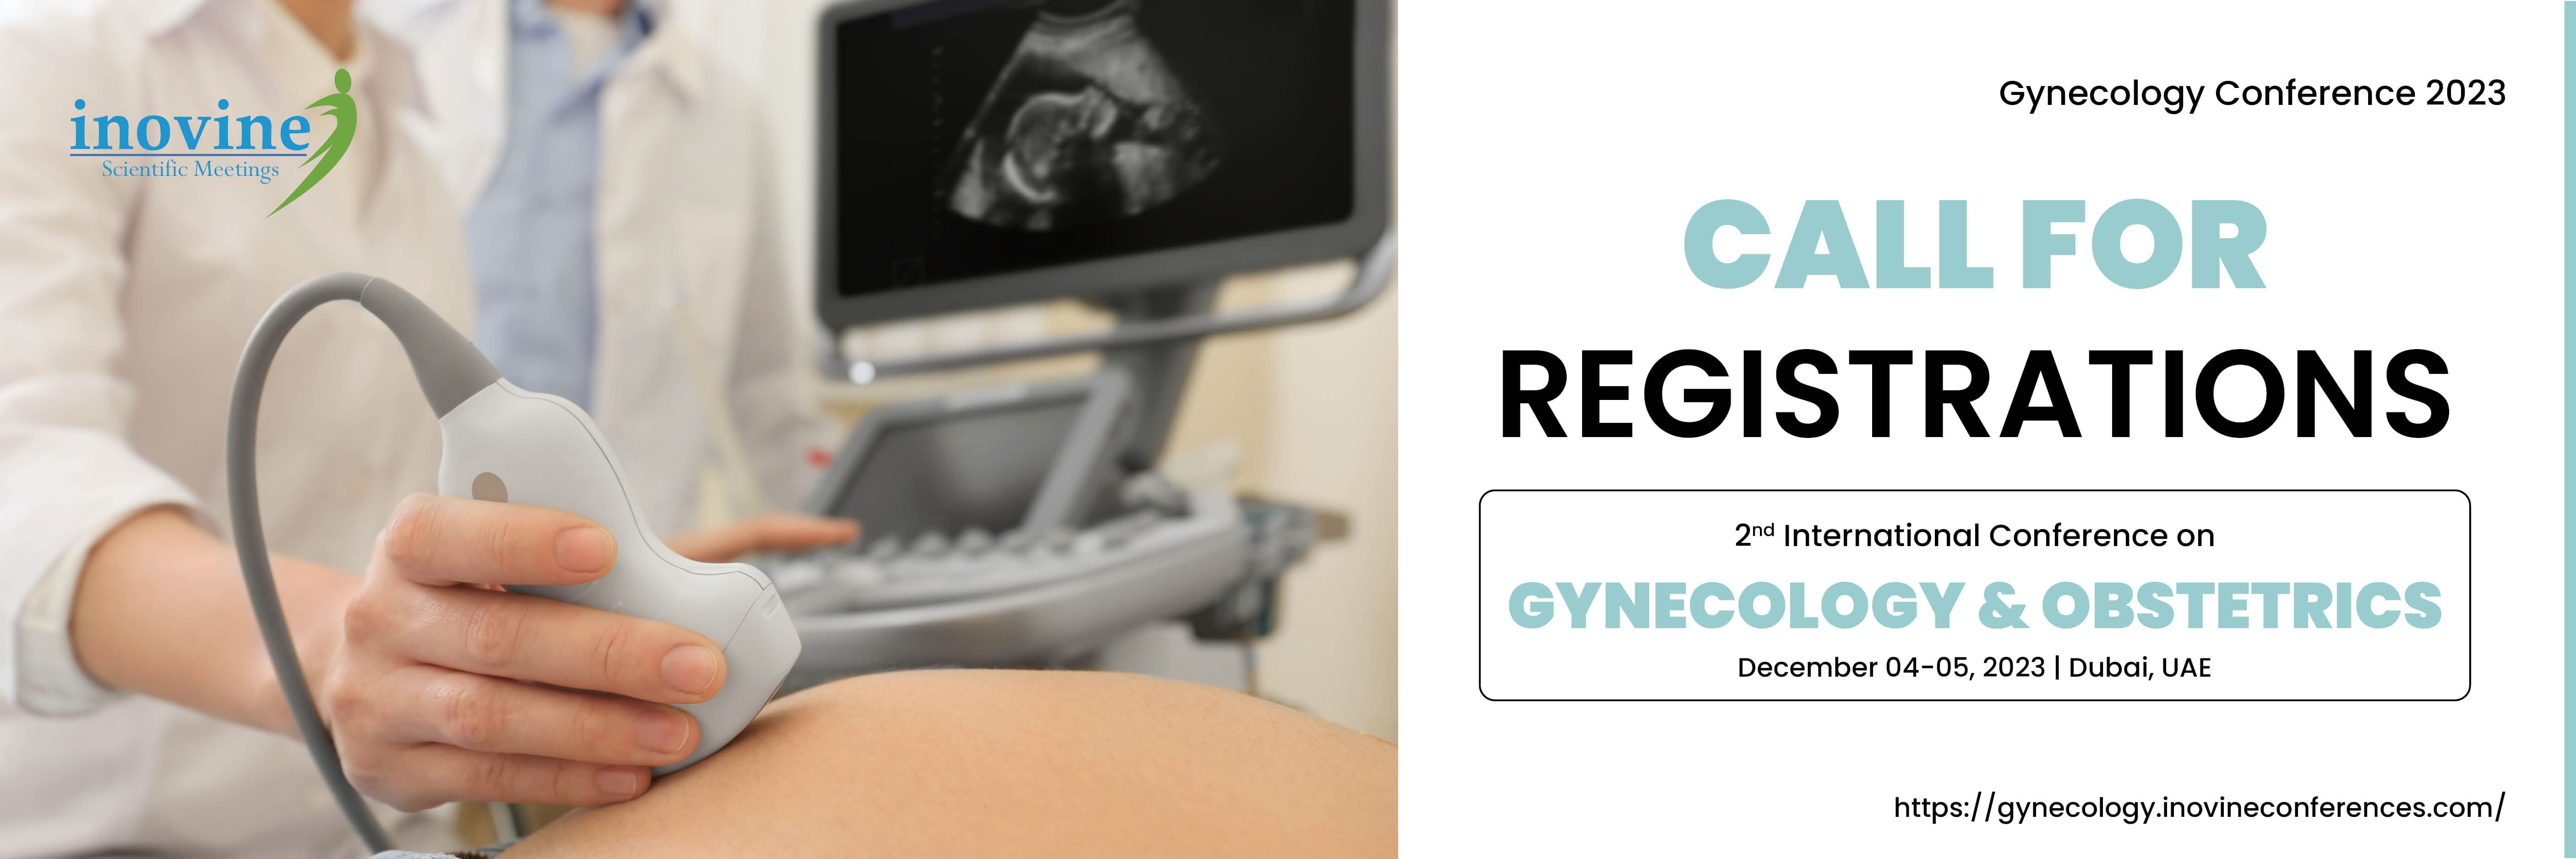 Gynecology Congress 2023